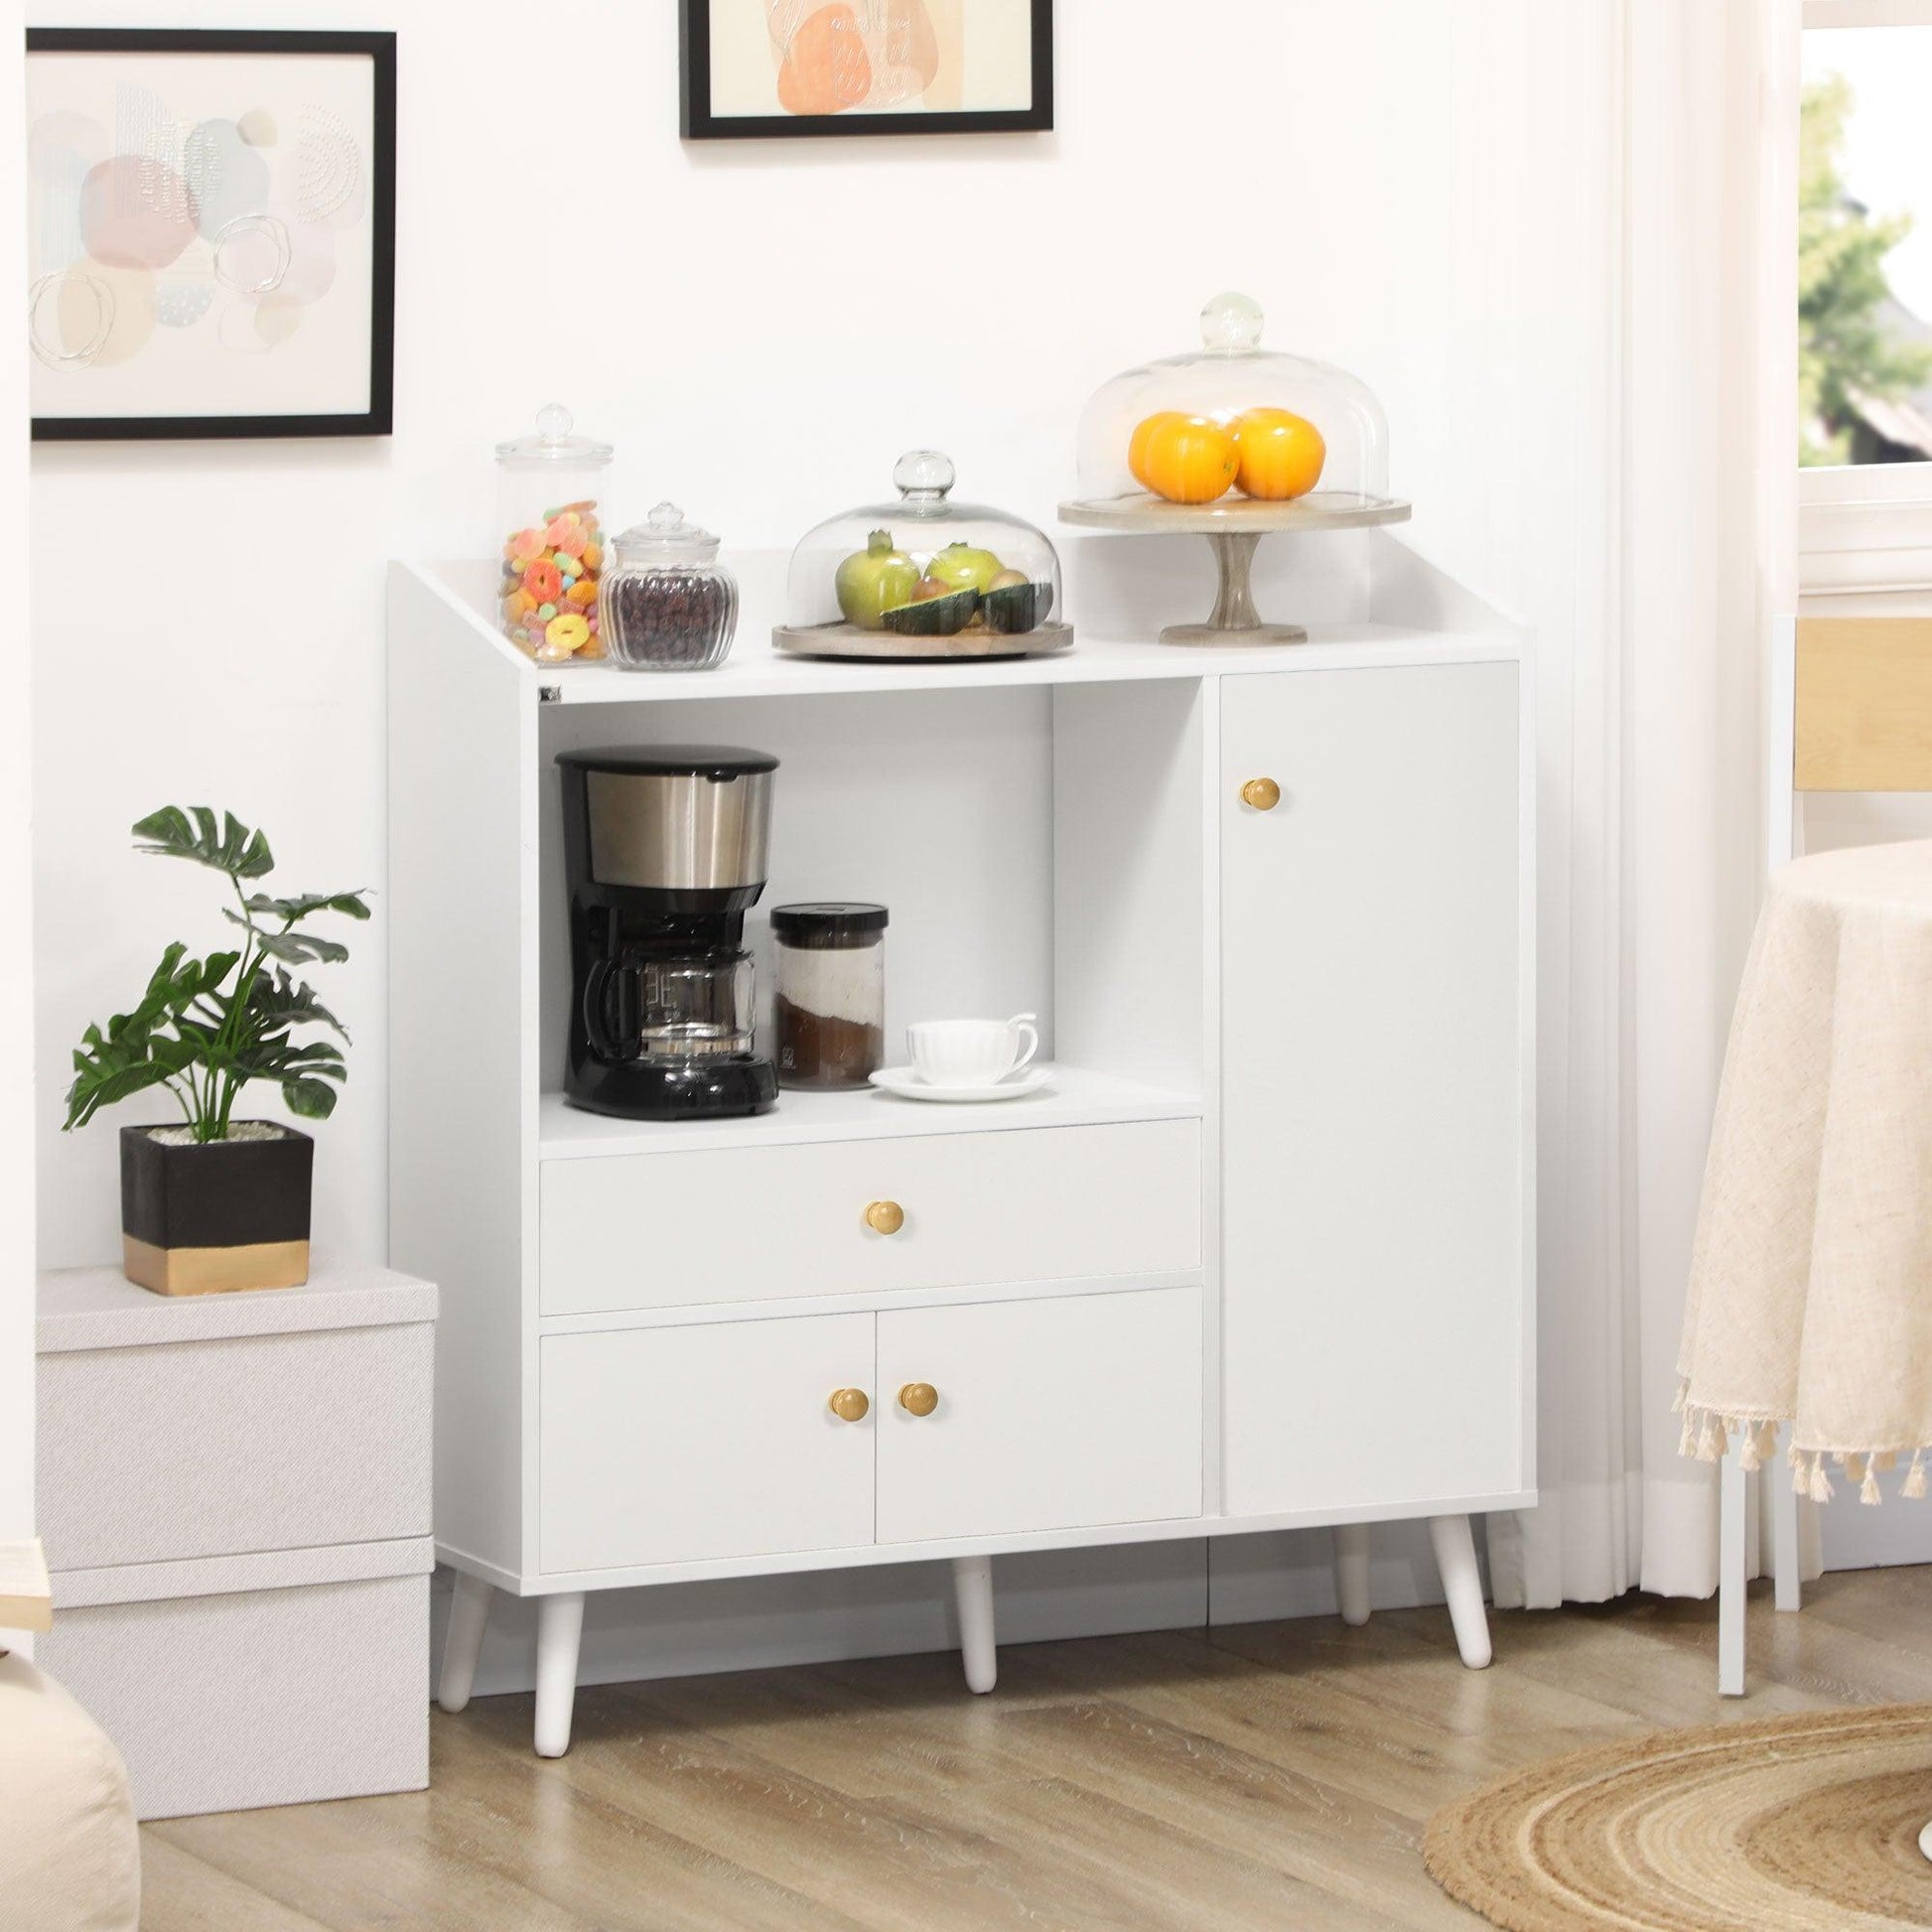 HOMCOM Kitchen Cabinet with Shelves & Drawer - ALL4U RETAILER LTD